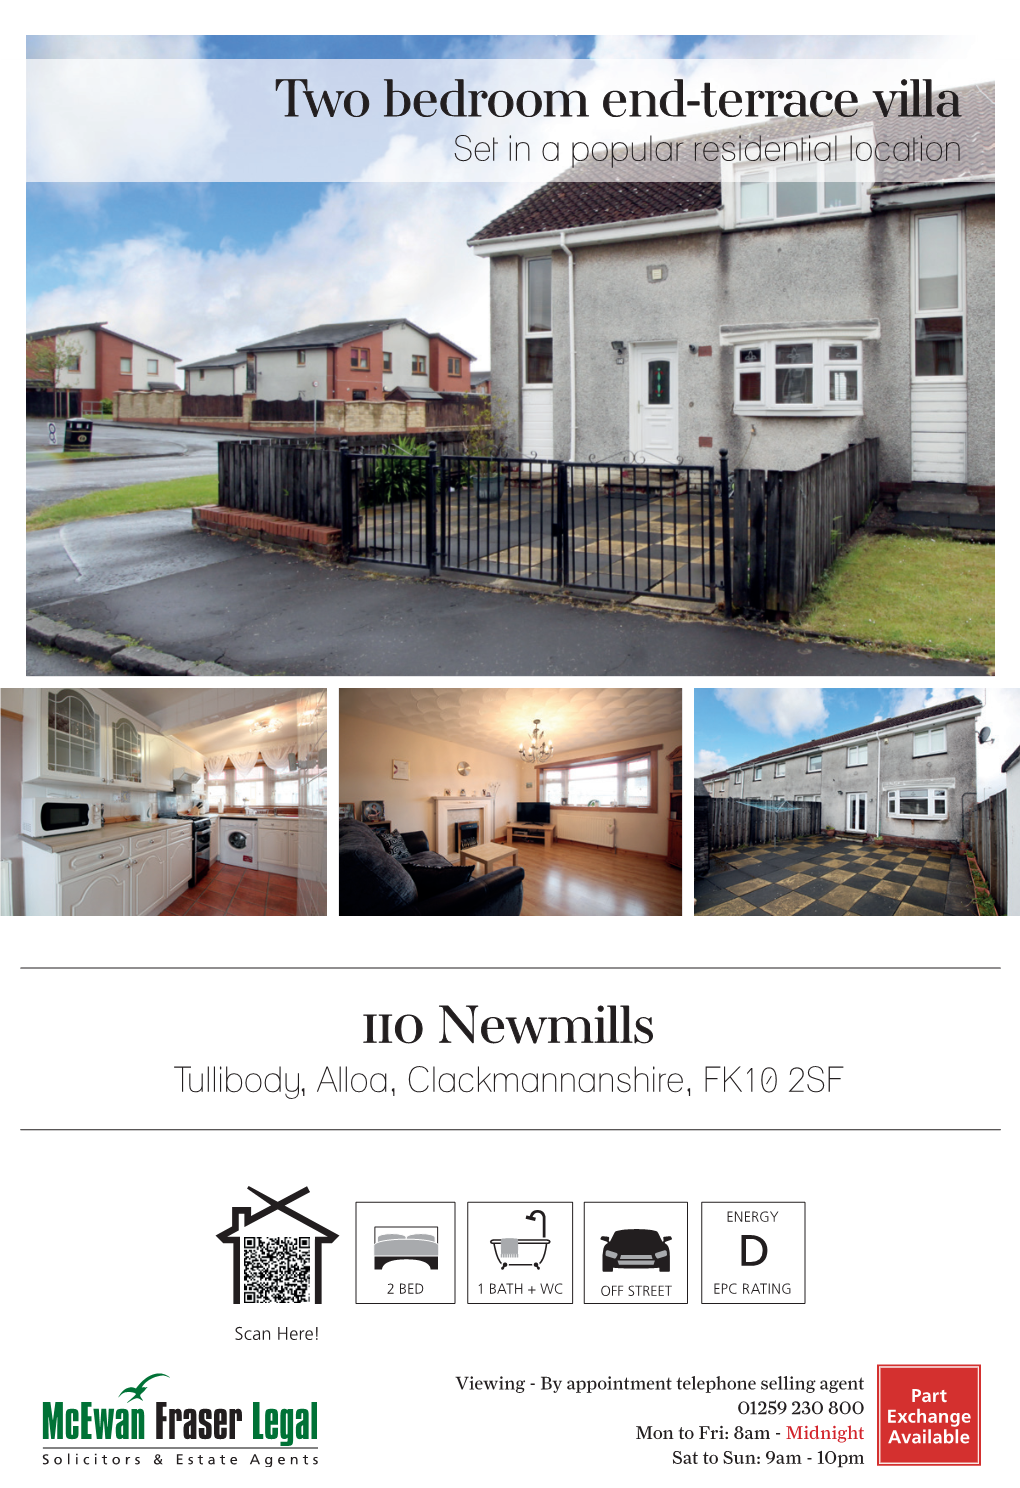 110 Newmills Two Bedroom End-Terrace Villa